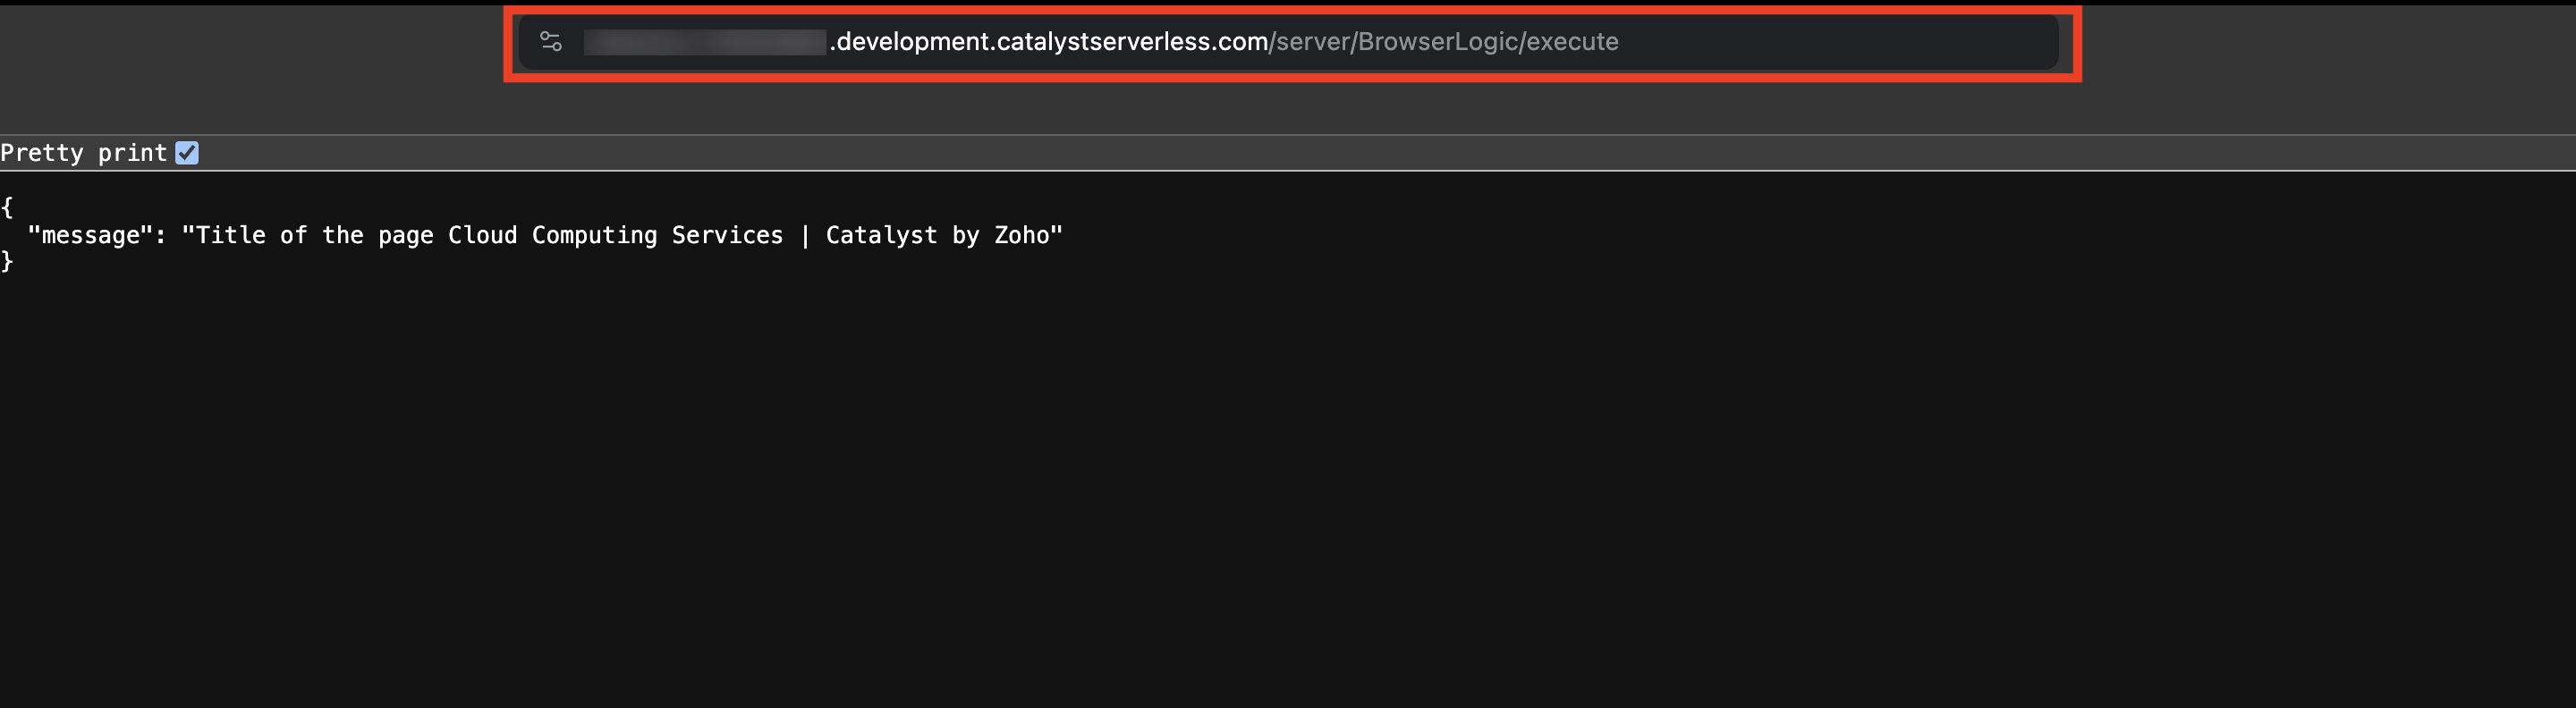 catalyst_serverless_functions_browserlogic_function_url_depict